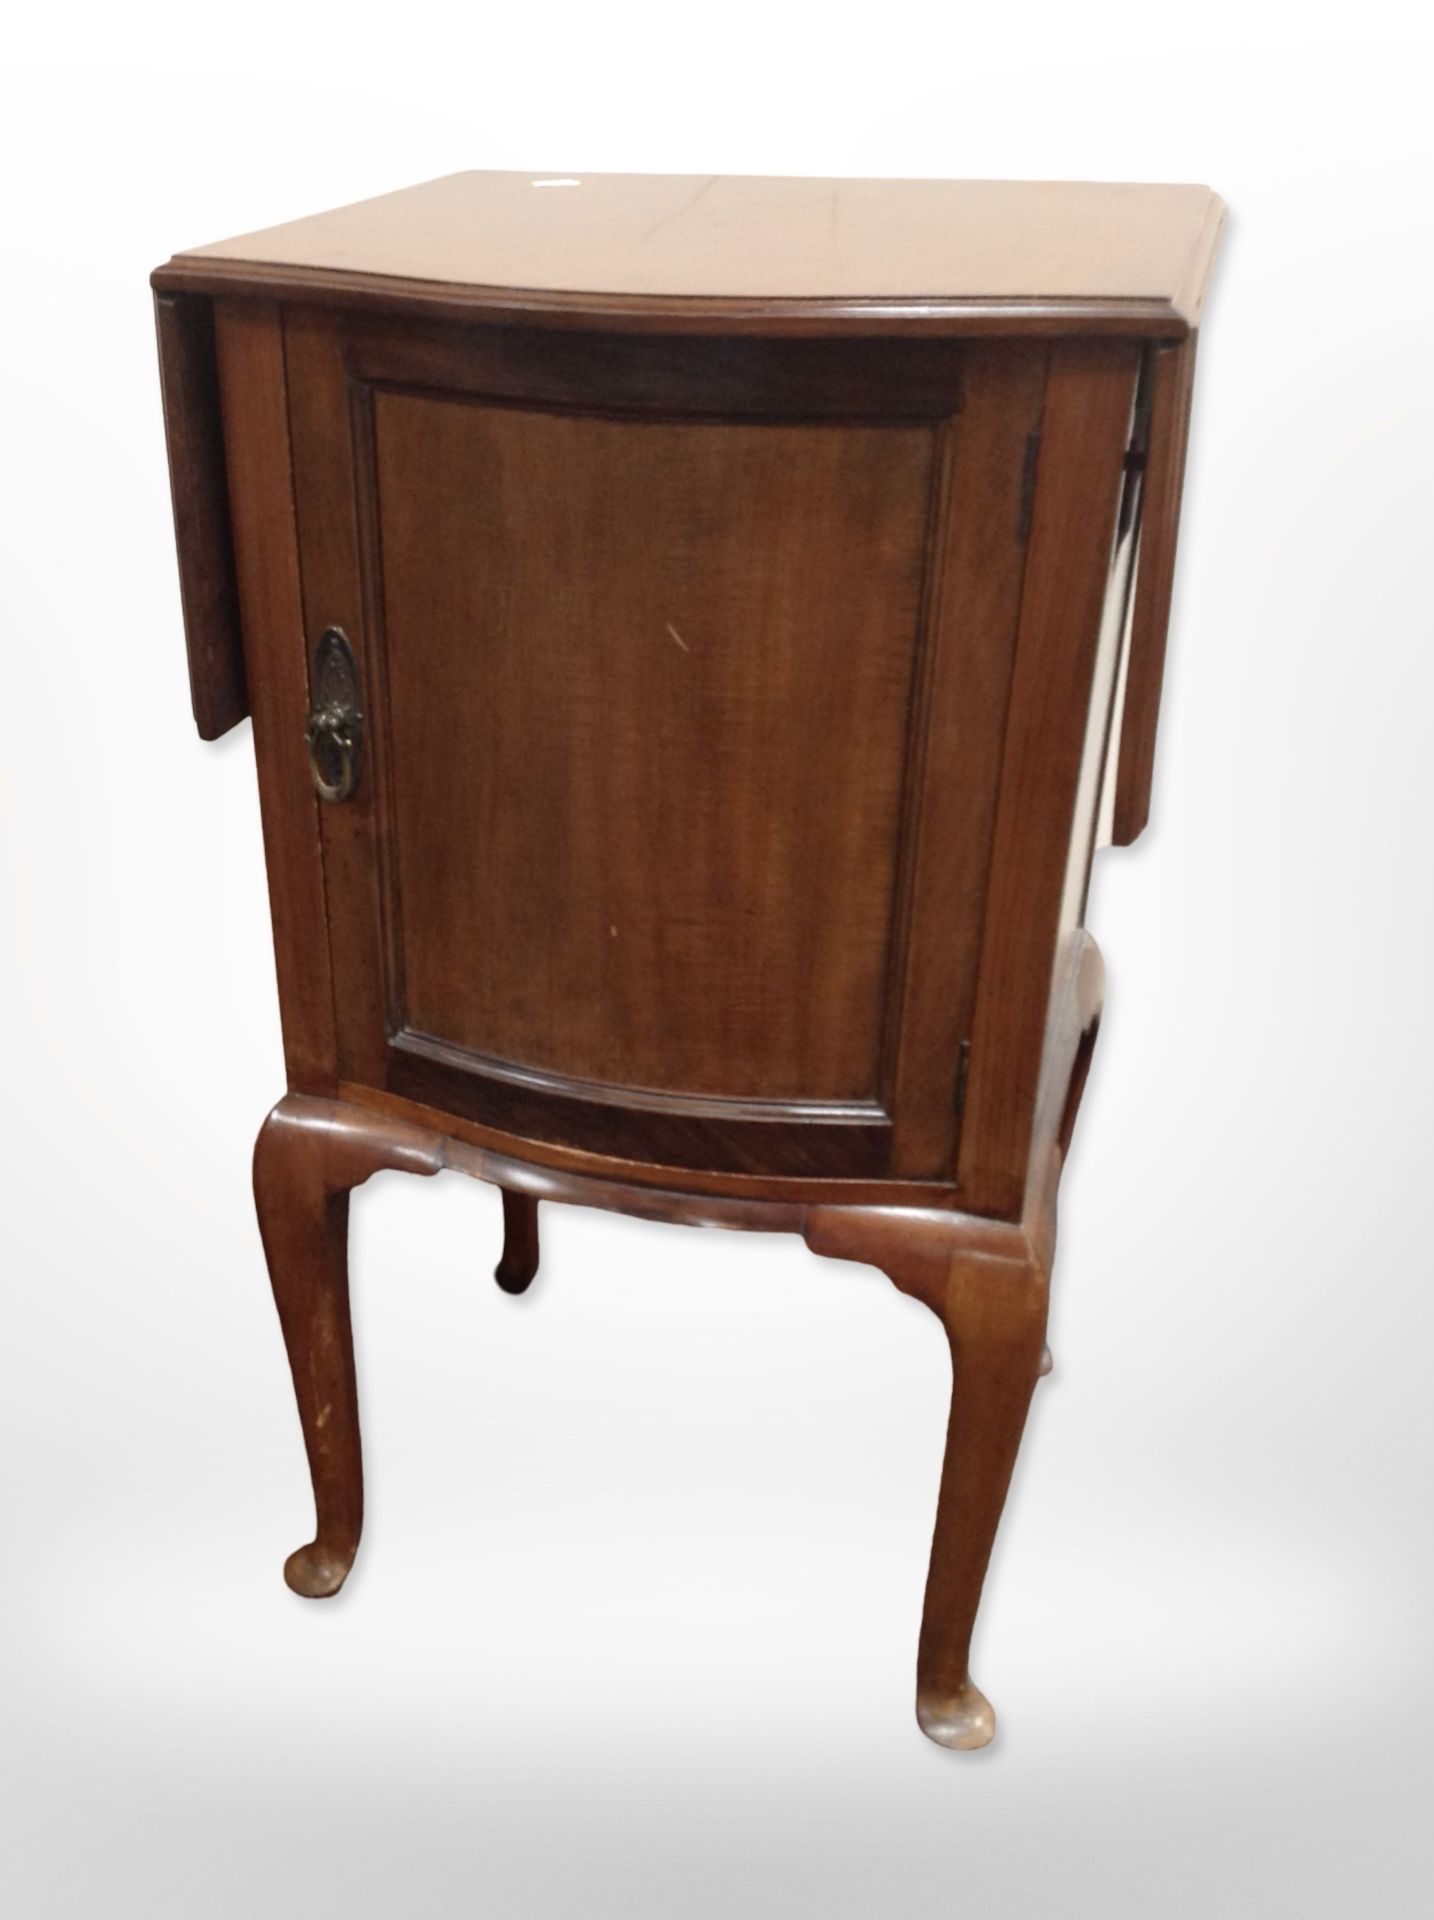 An early 20th century mahogany drop leaf pot cupboard,